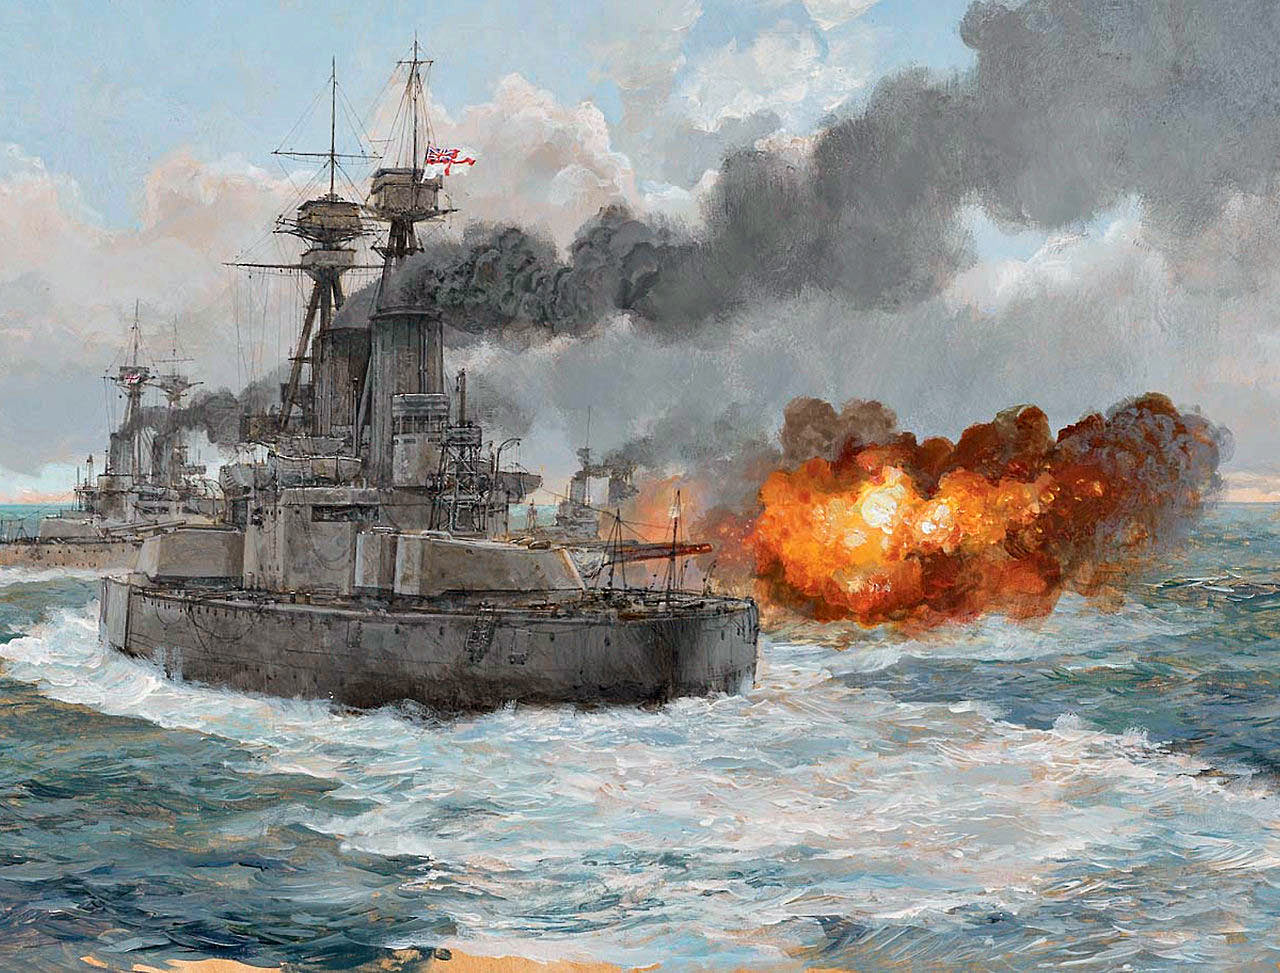 British Battleship HMS Bellerophon in action at the Battle of Jutland on 31st May 1916